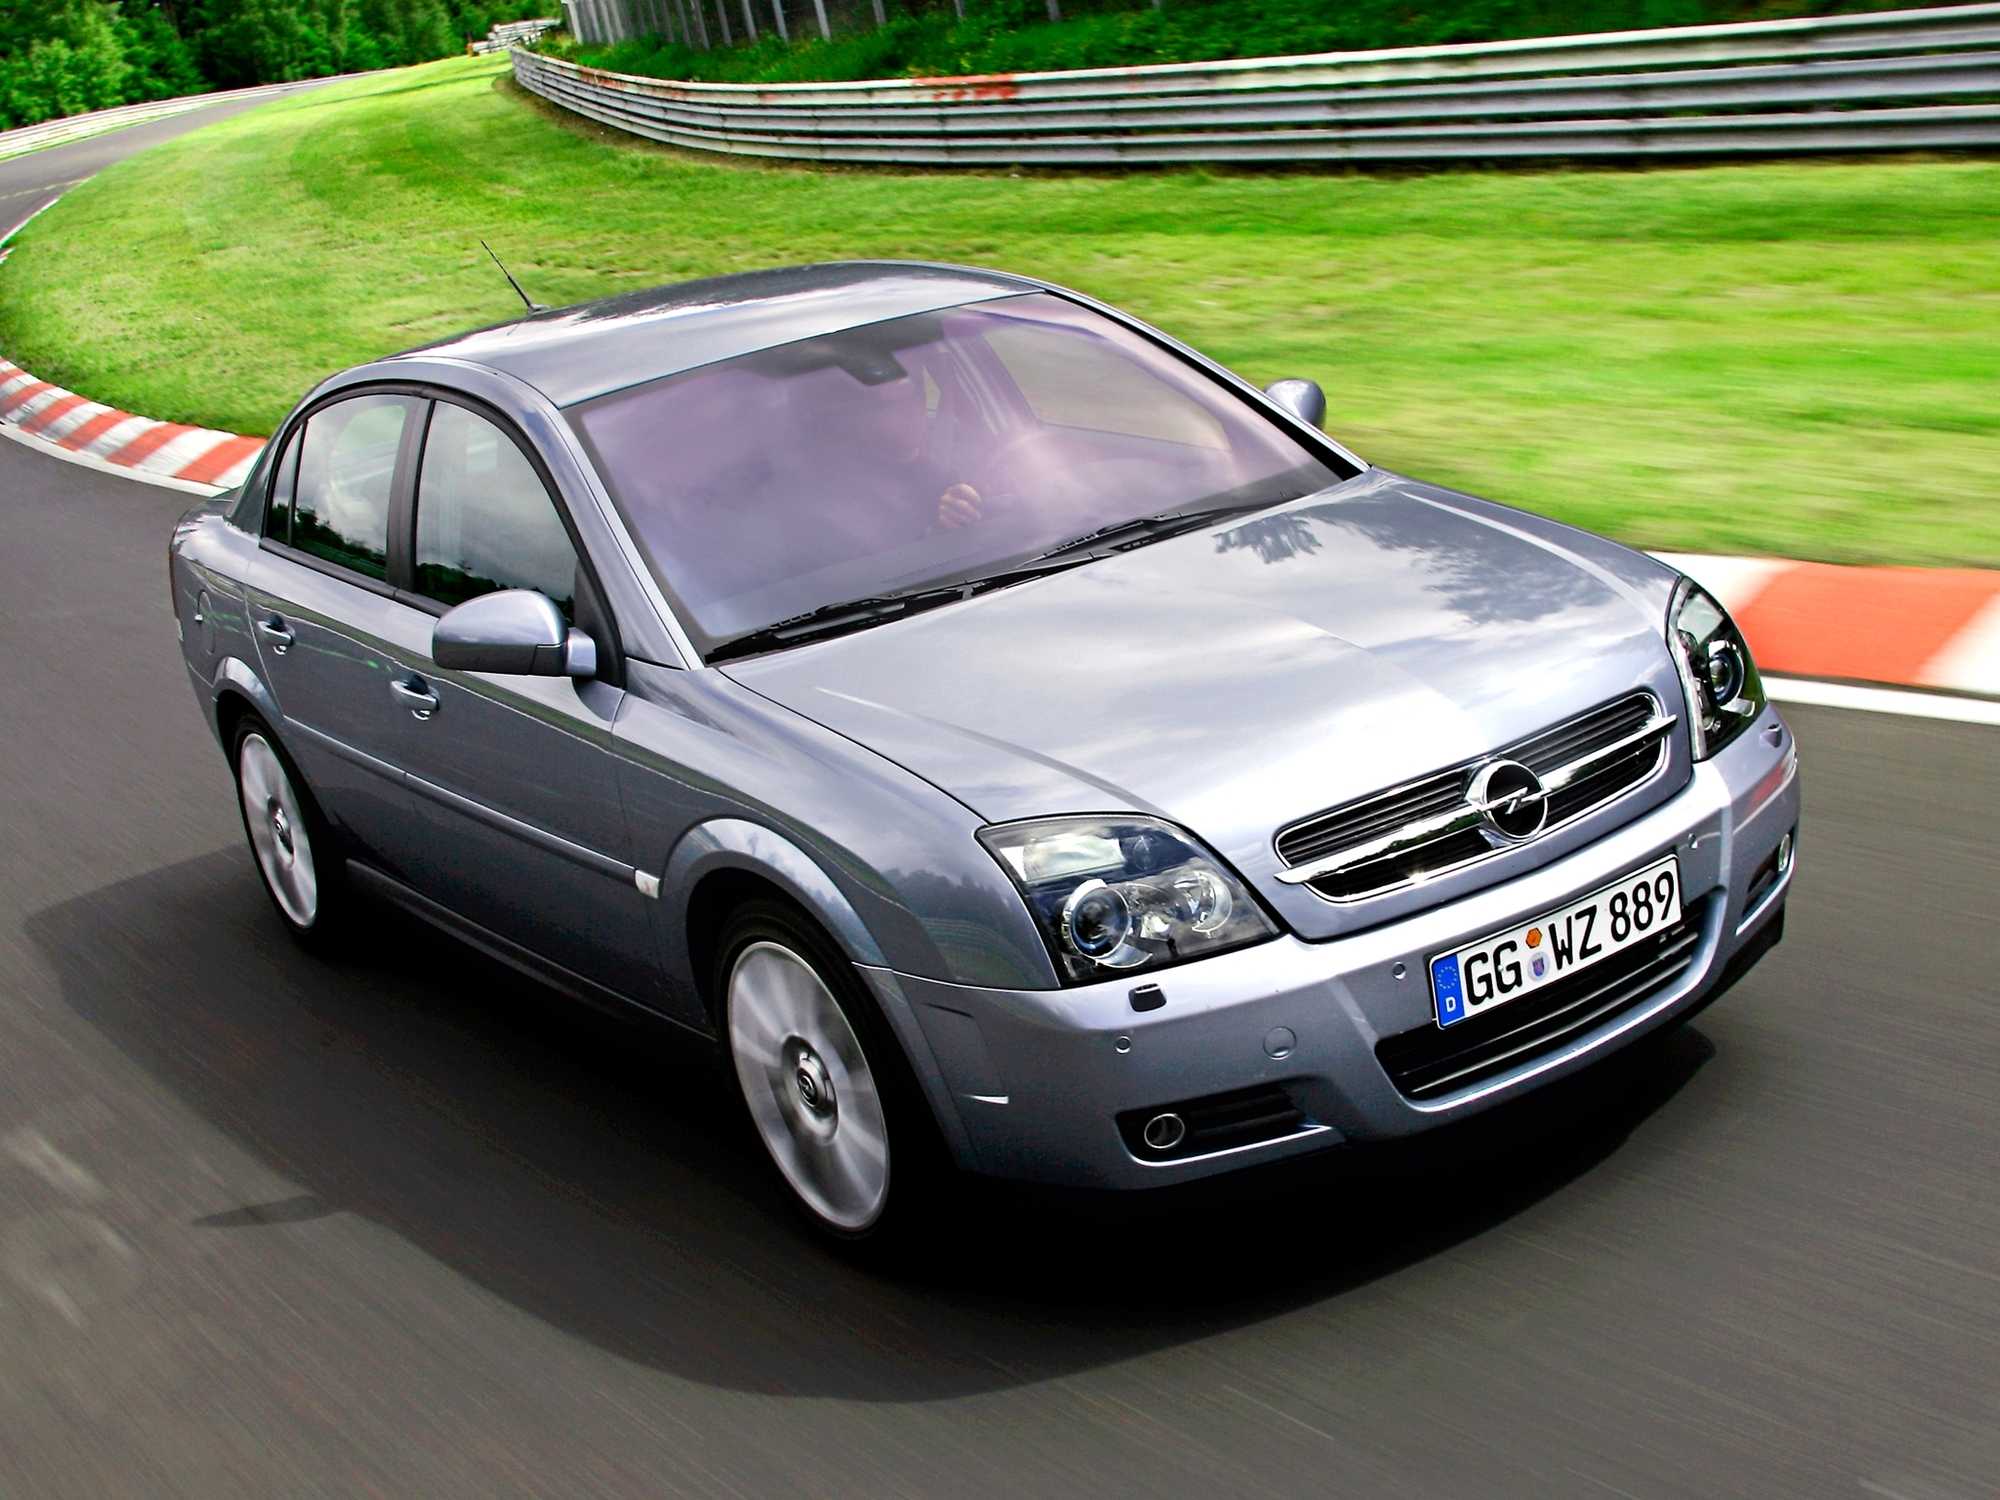 Вектра б года выпуска. Opel Vectra c 2002. Опель Вектра ц 2002. Опель Вектра с 2008 2.2. Опель Вектра с 2002 2.2.